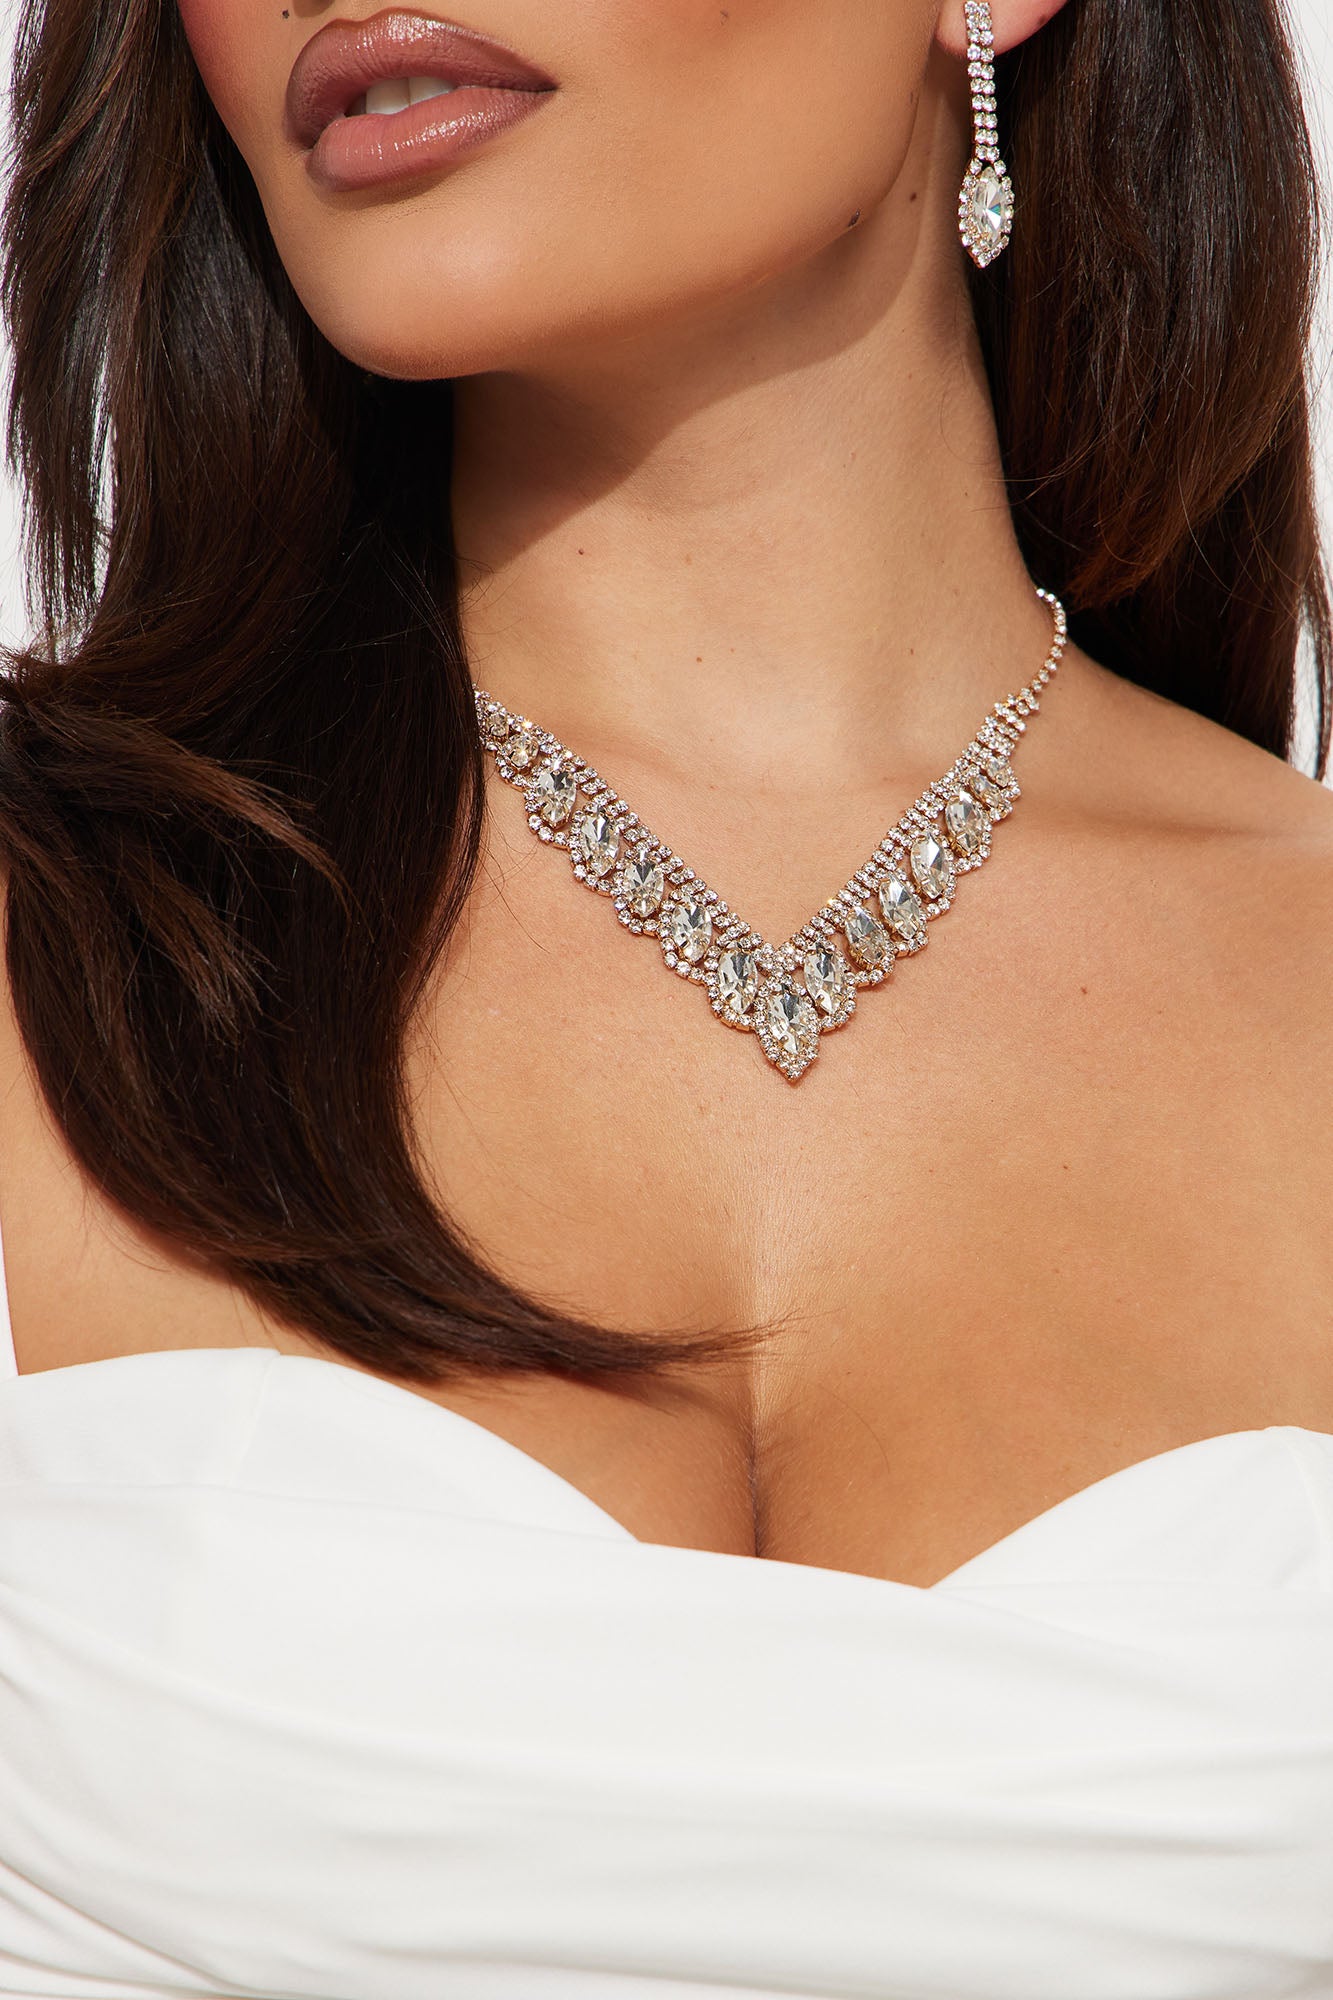 Indian High Quality New Style Bridal Fancy Necklace Fashion CZ/AD Jewelry  Set | eBay